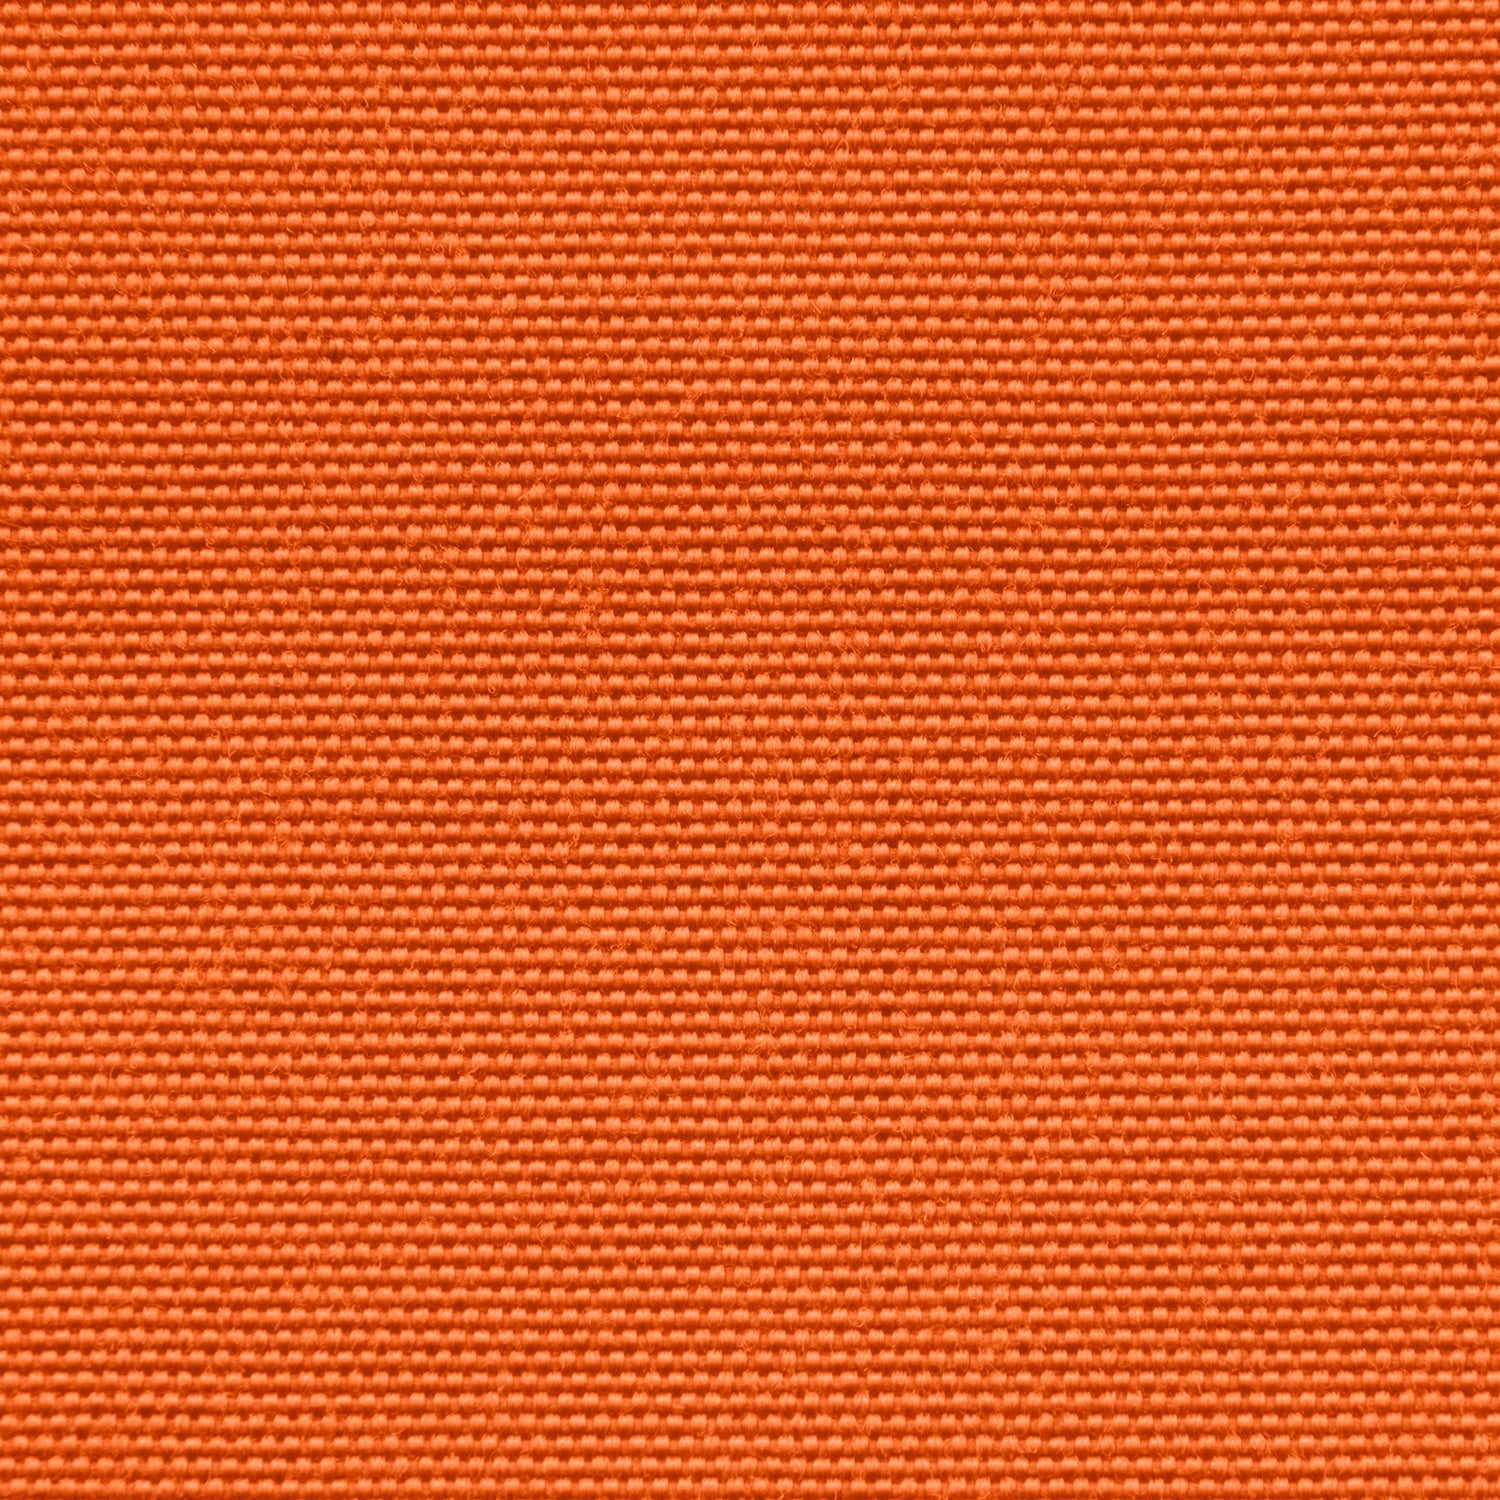 Sitzsack Seat Colorin Orange